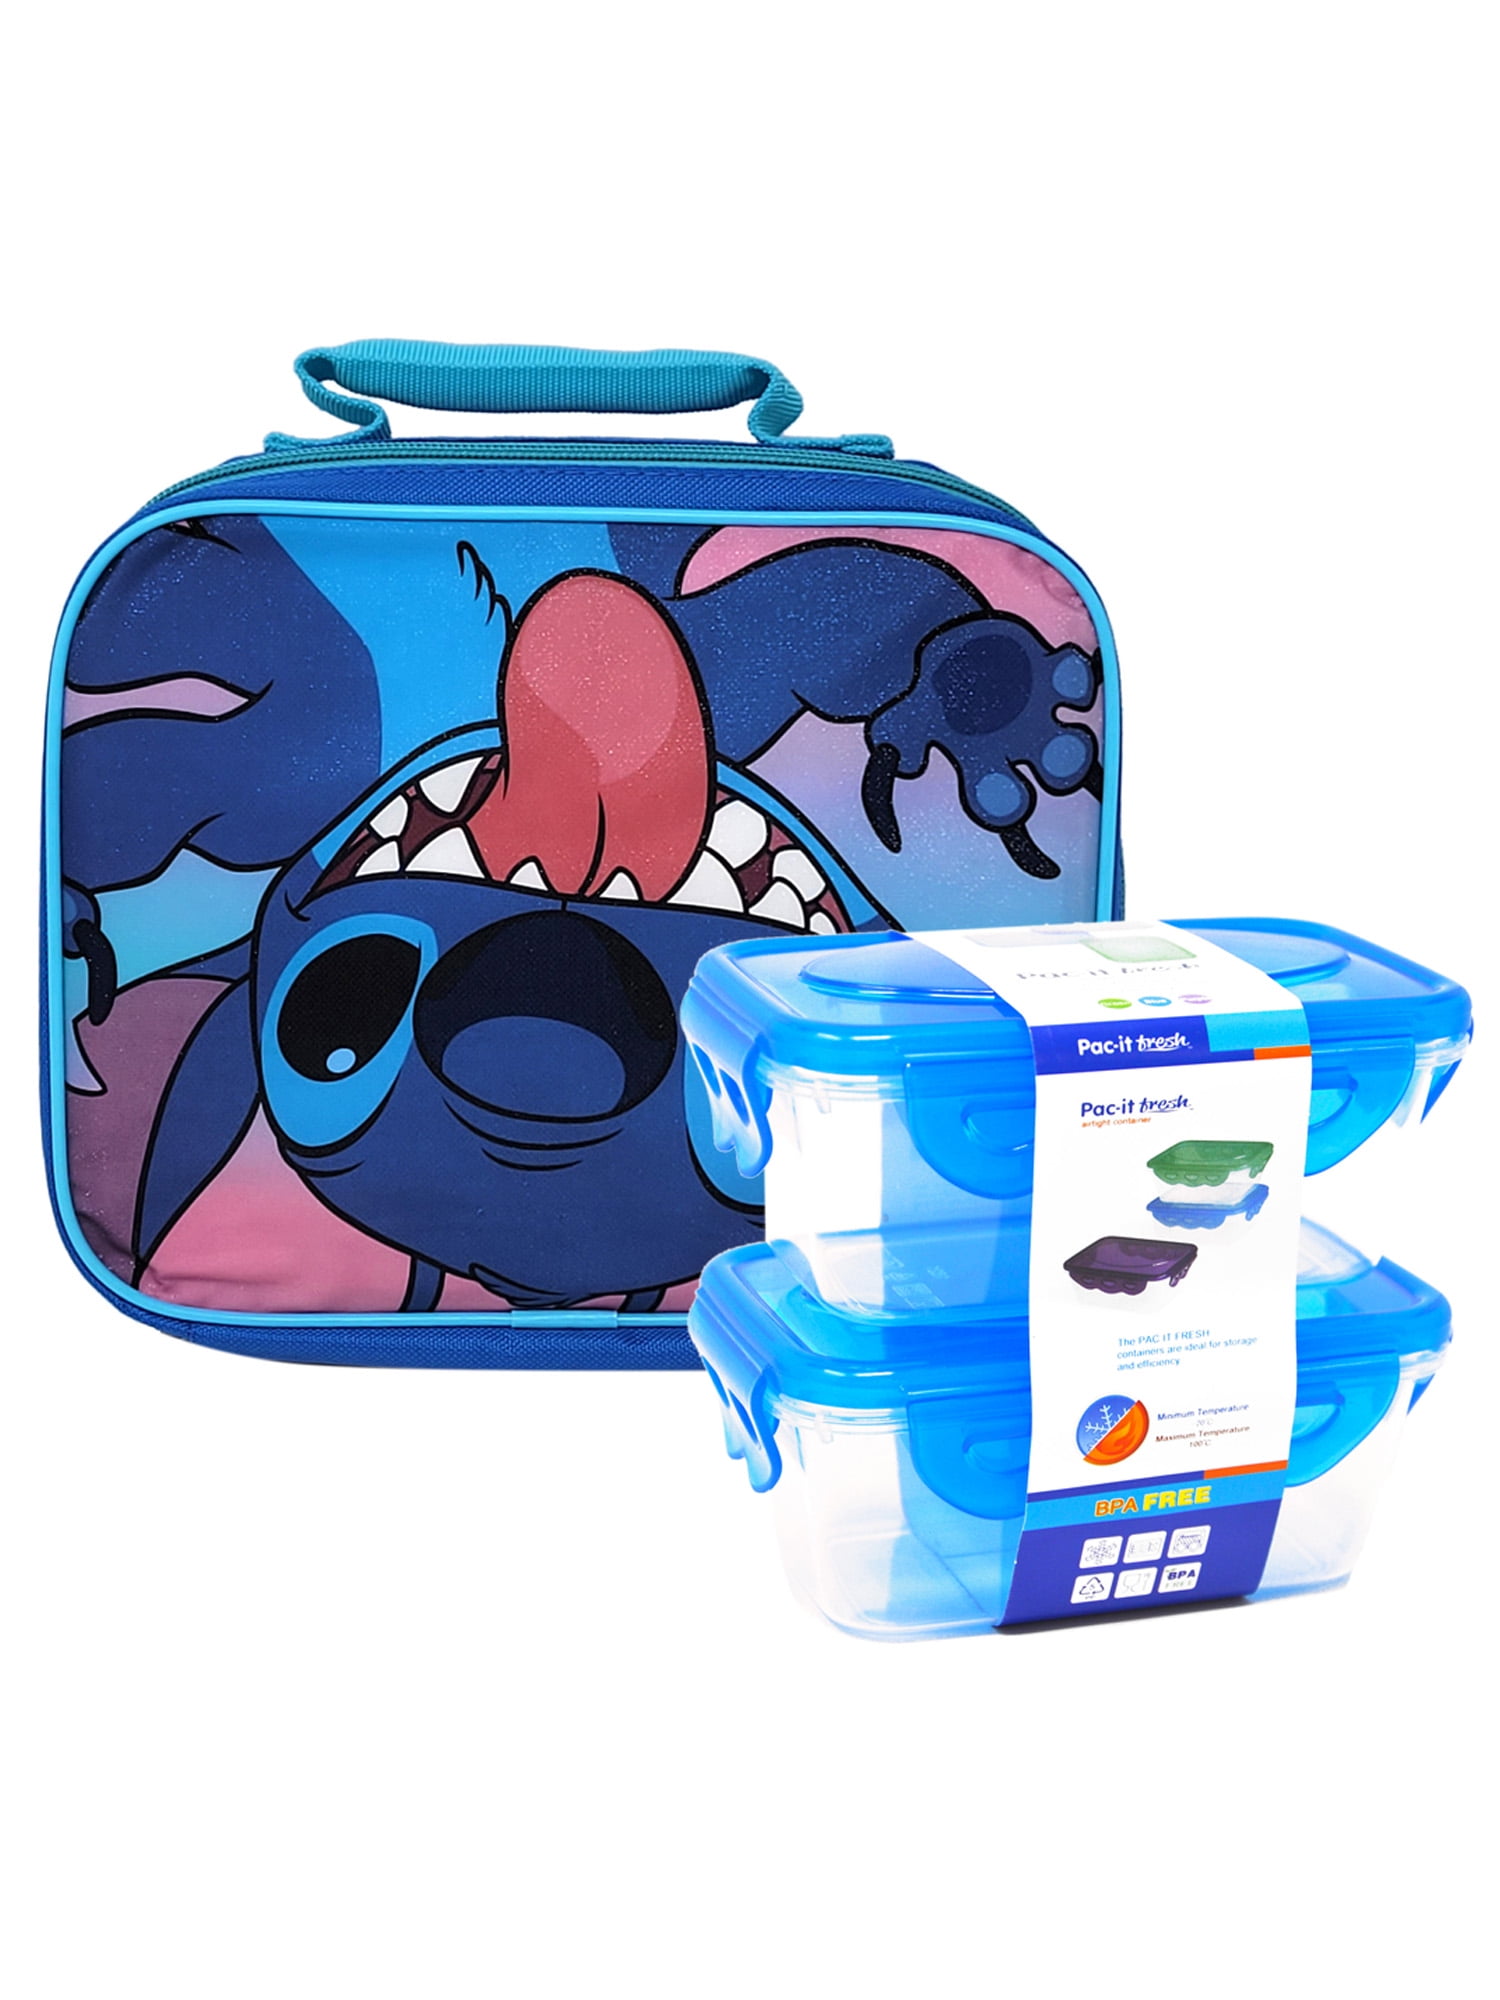 Disney Lilo & Stitch Girls Boys Soft Insulated School Lunch Box (One size, Blue)